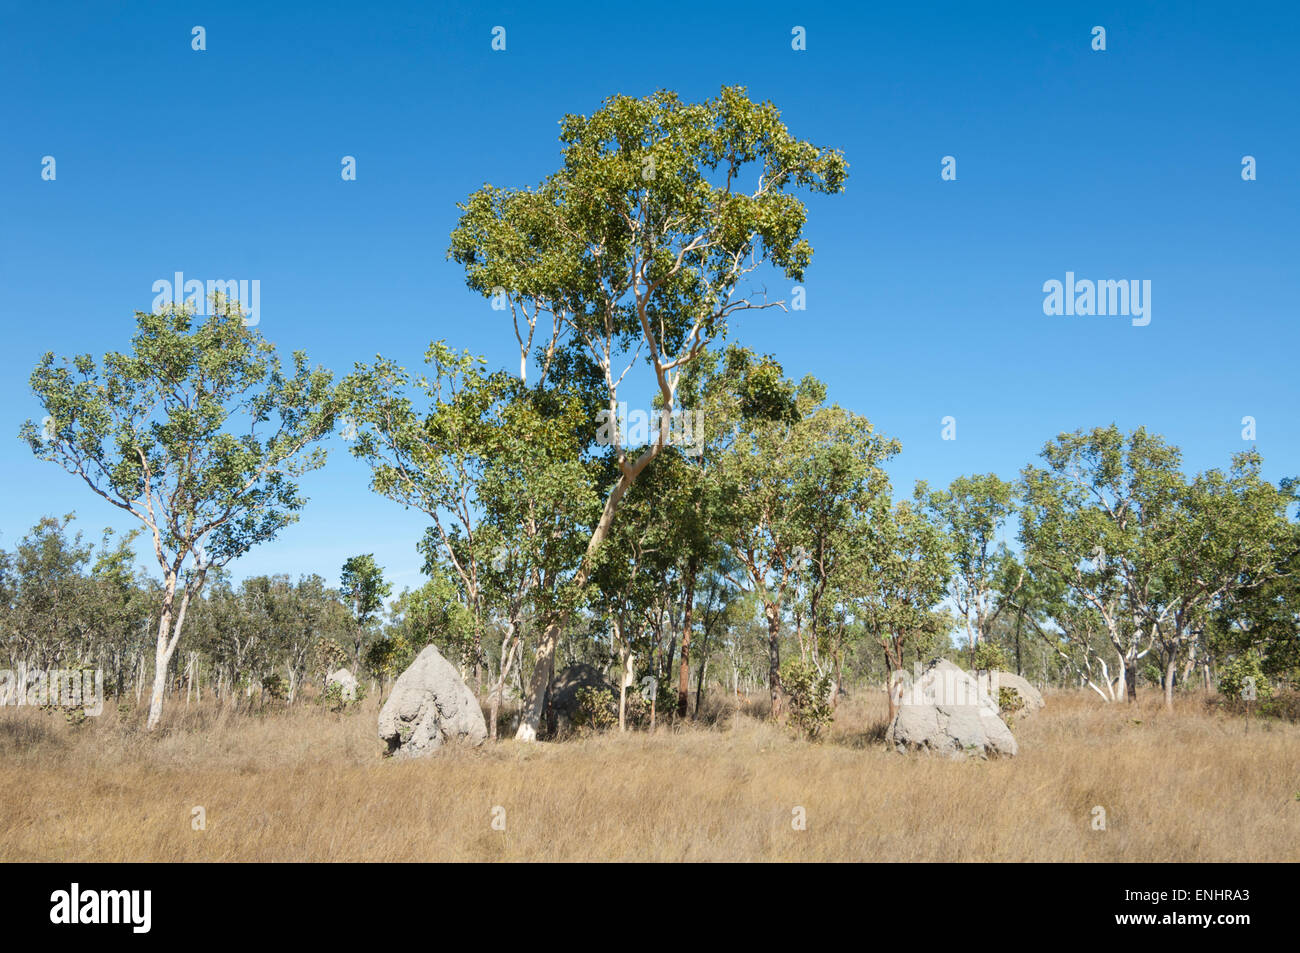 Les termites Mounds dans la savane, Charnley River Station, Kimberley, Australie occidentale Banque D'Images